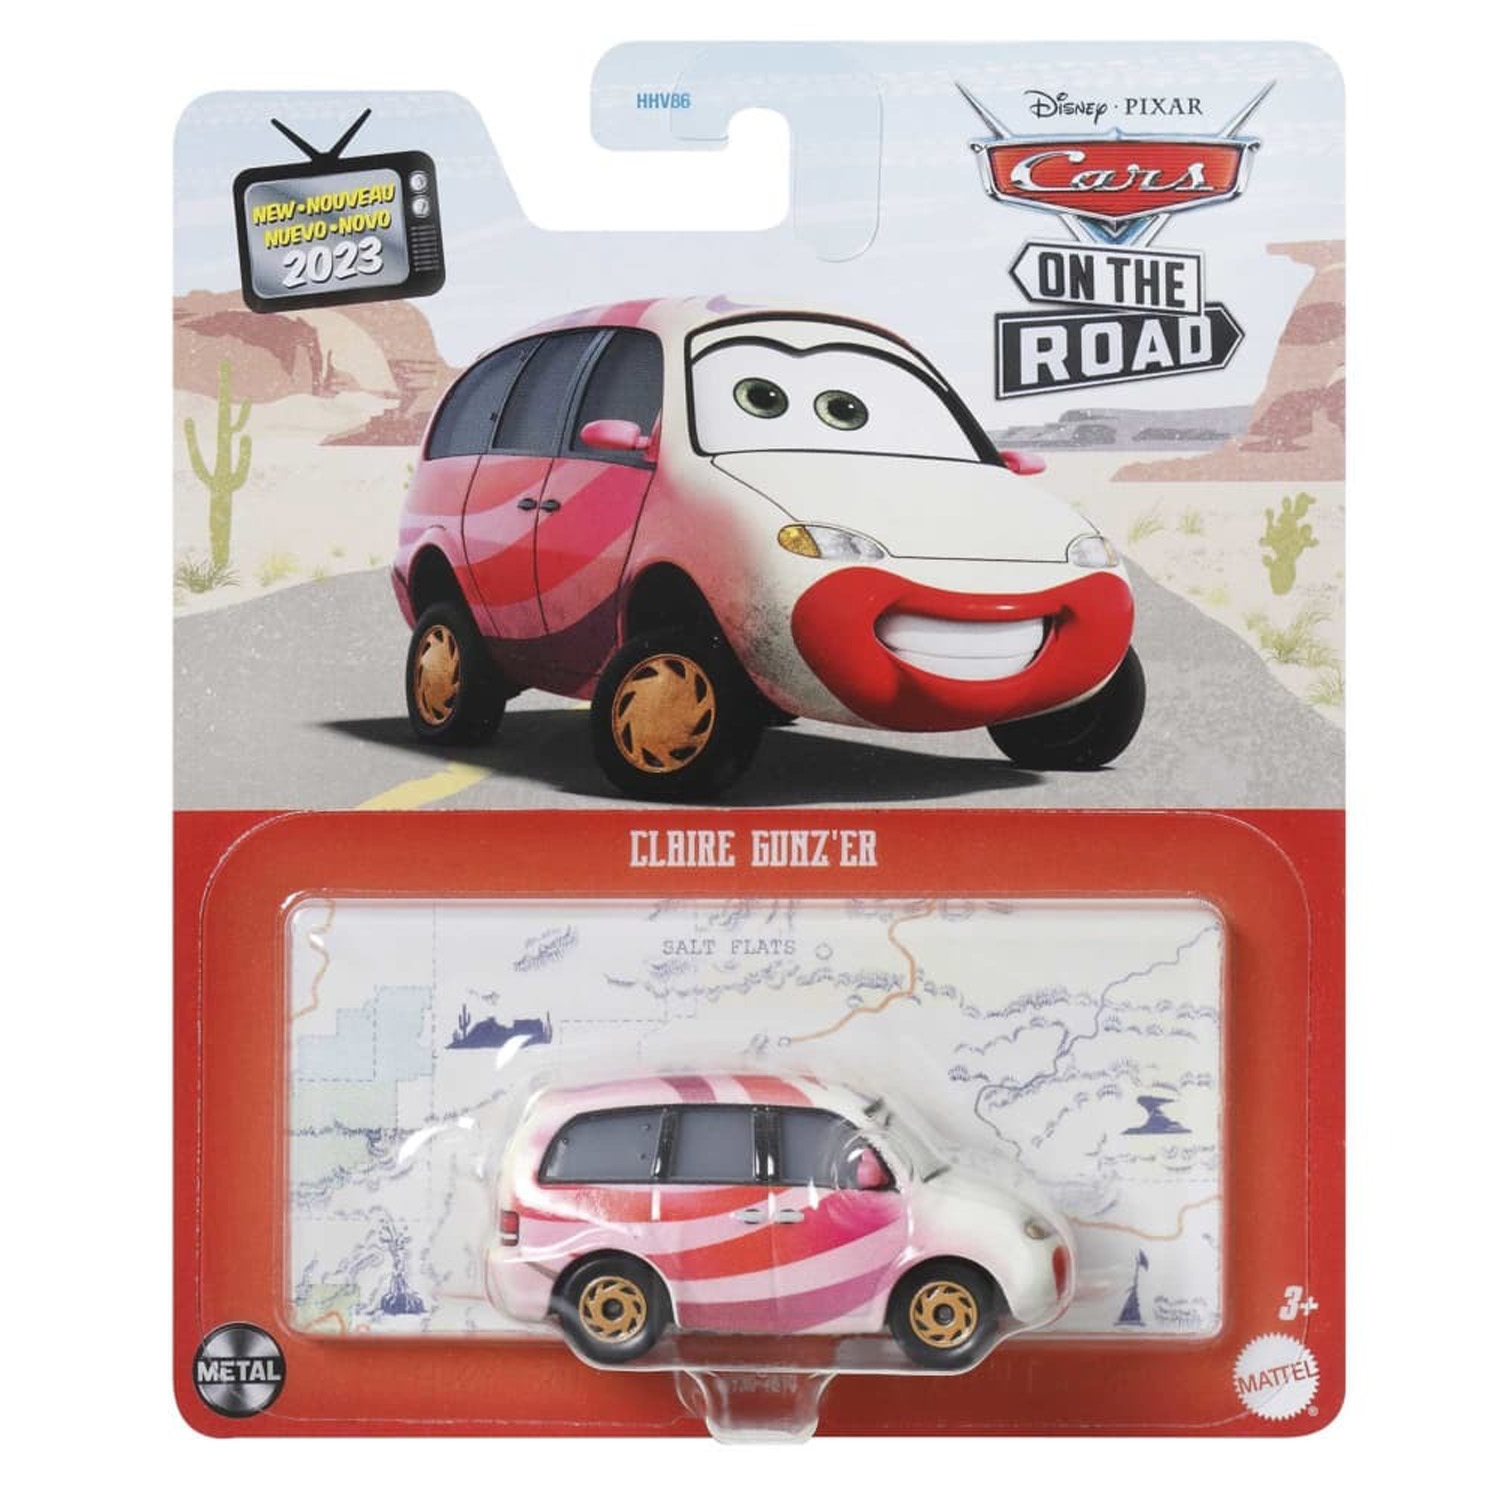 Disney Pixar Cars 1:55 Scale Die-cast Claire Gun'zer